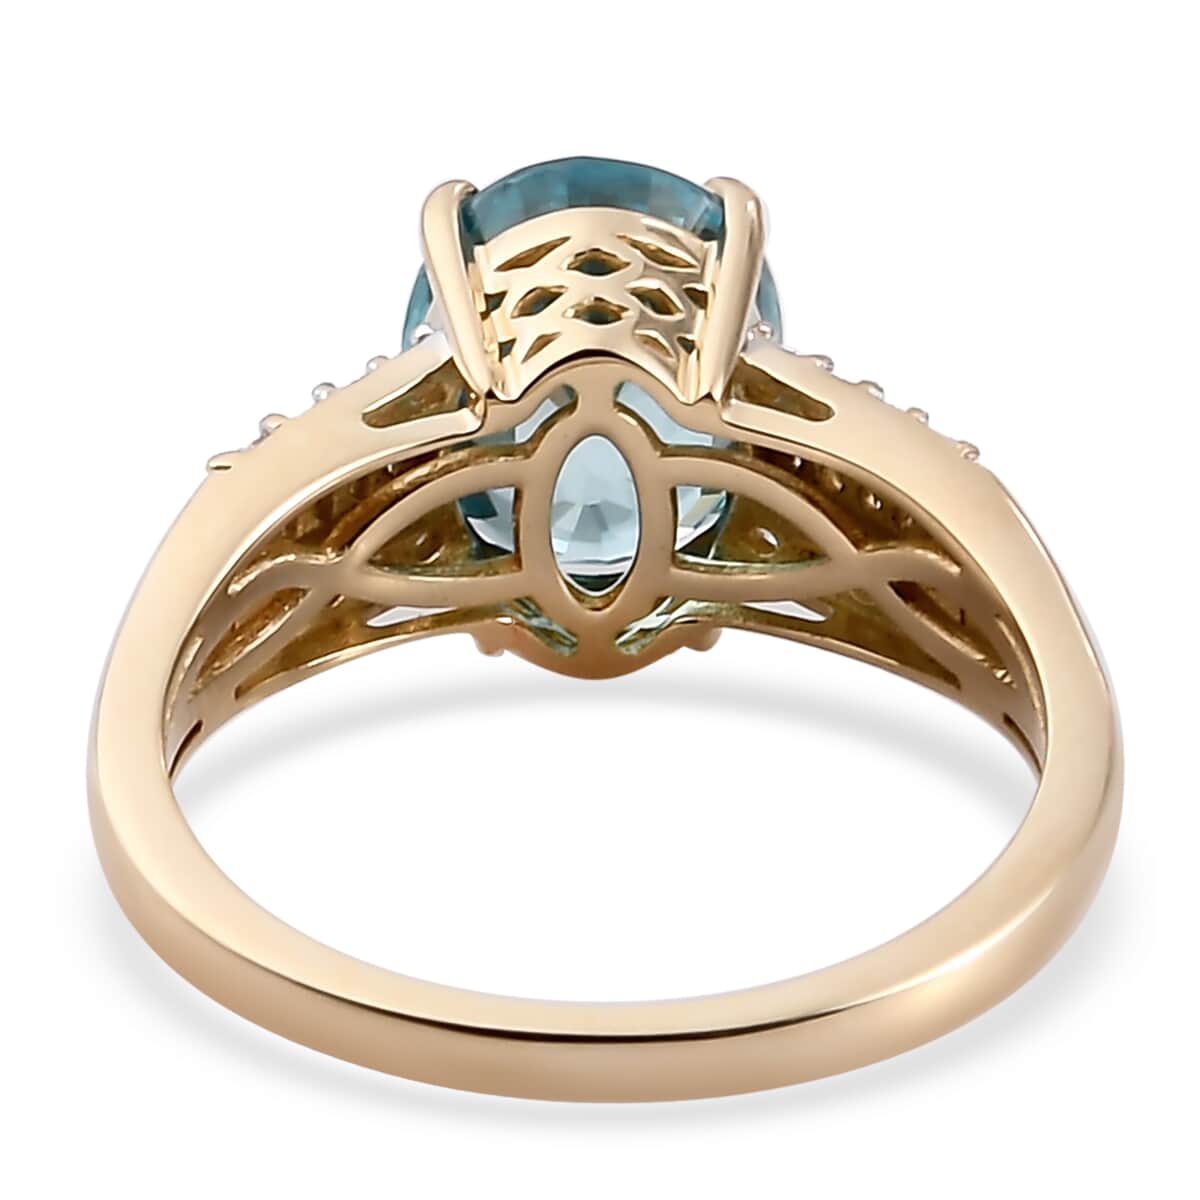 Luxoro 10K Yellow Gold Premium Ratanakiri Blue Zircon and Diamond Ring (Size 9.0) 4.60 ctw image number 4